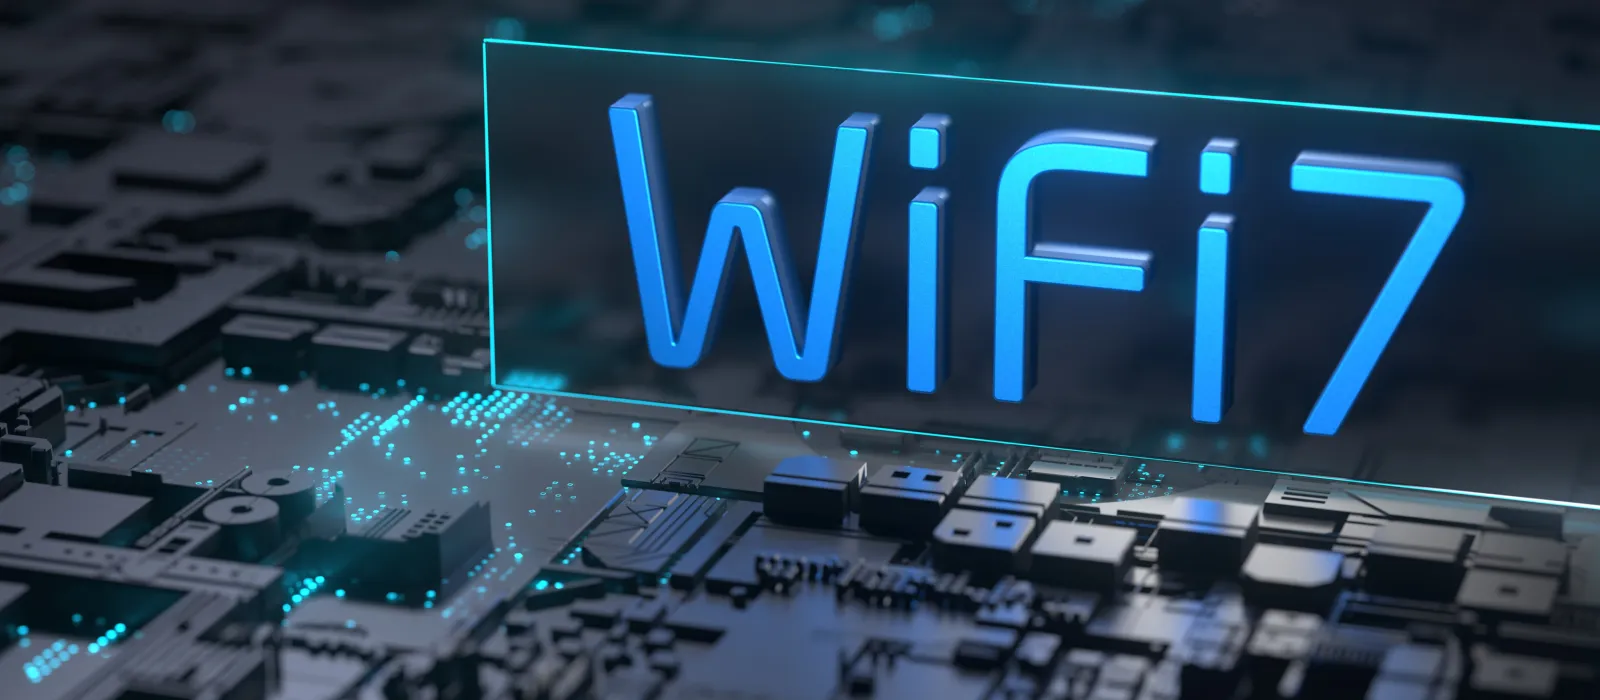 Wi-Fi 7 lettering on circuit board